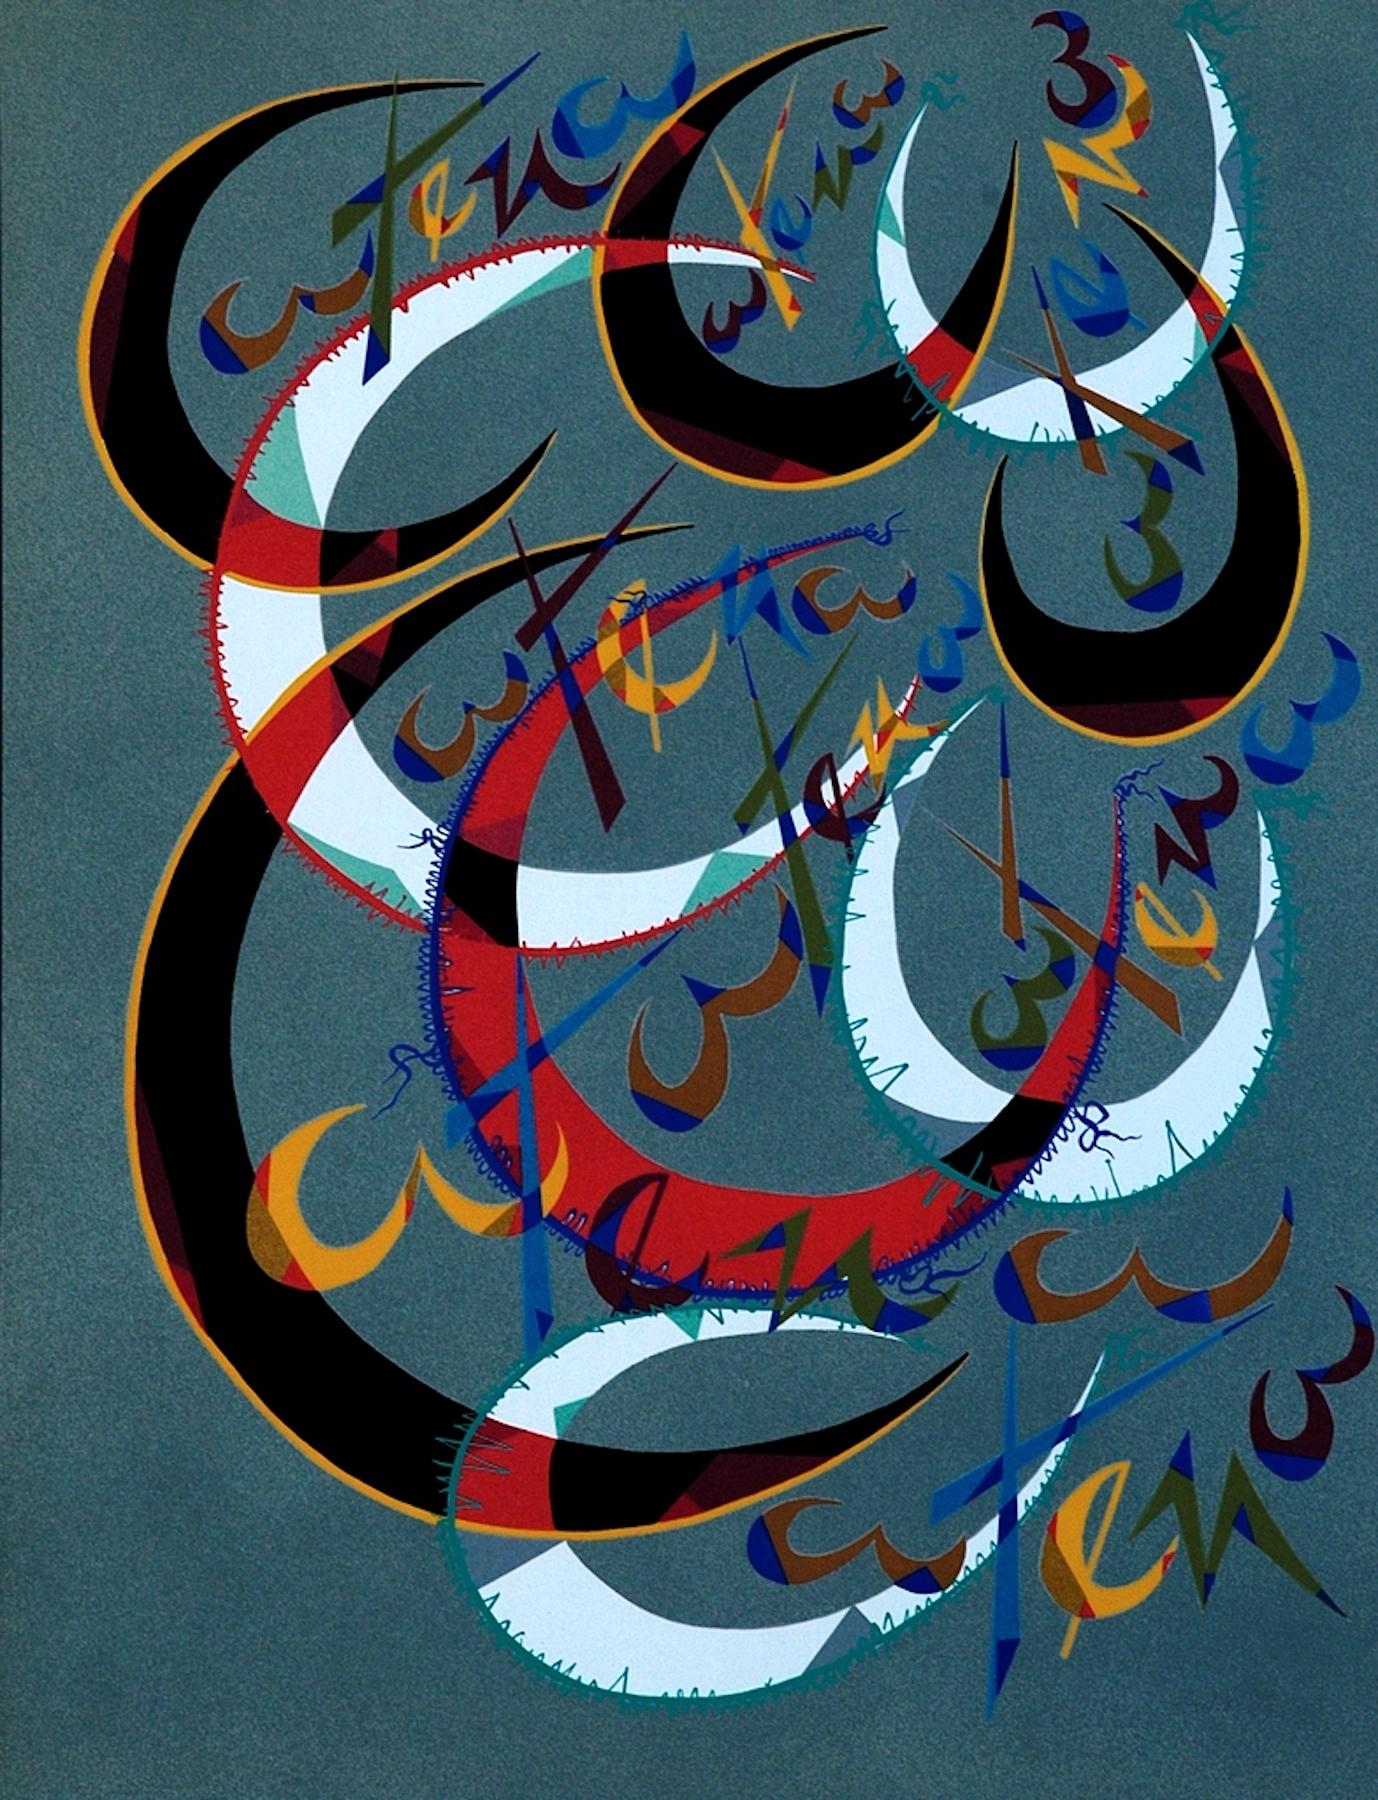 Letter C - Original Lithograph by Raphael Alberti - 1972